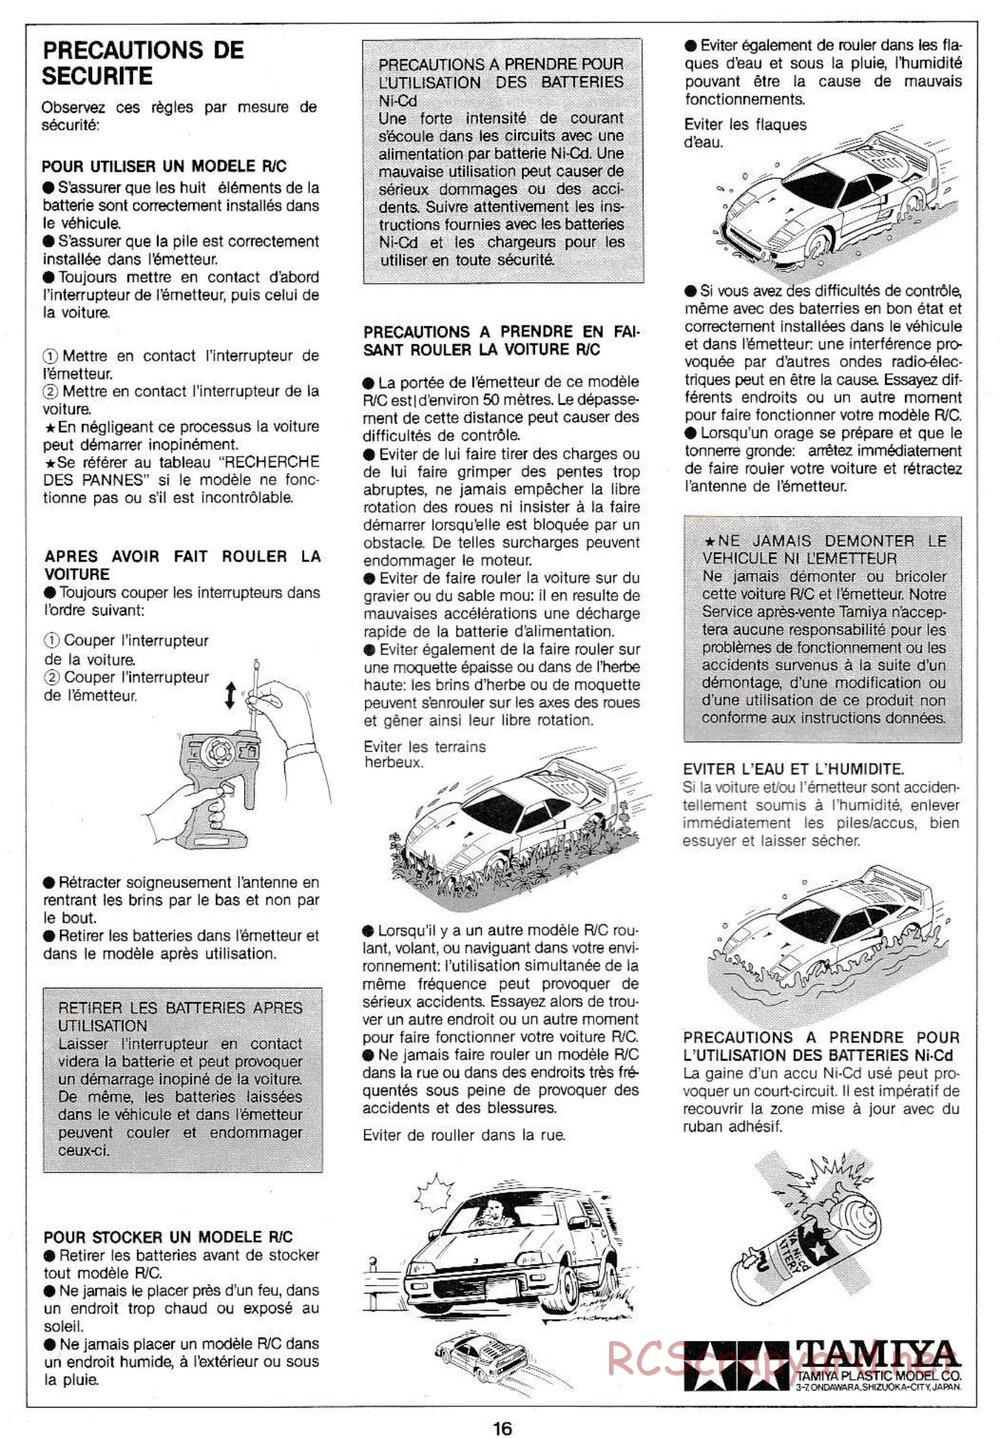 Tamiya - Ferrari F40 QD Chassis - Manual - Page 16